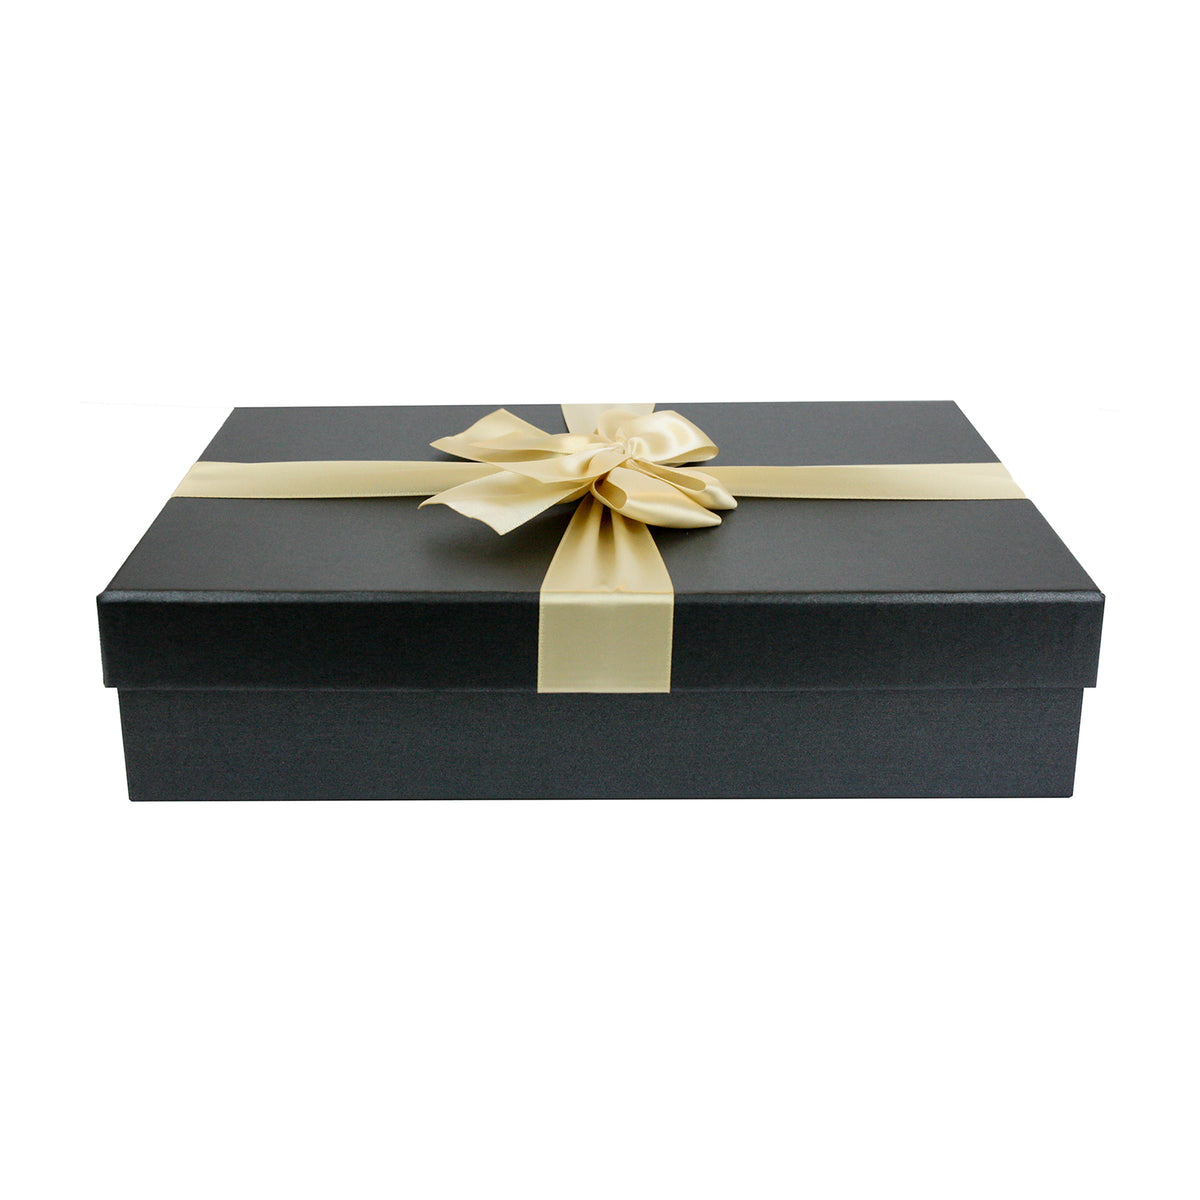 Luxurious black rectangle gift box for birthdays